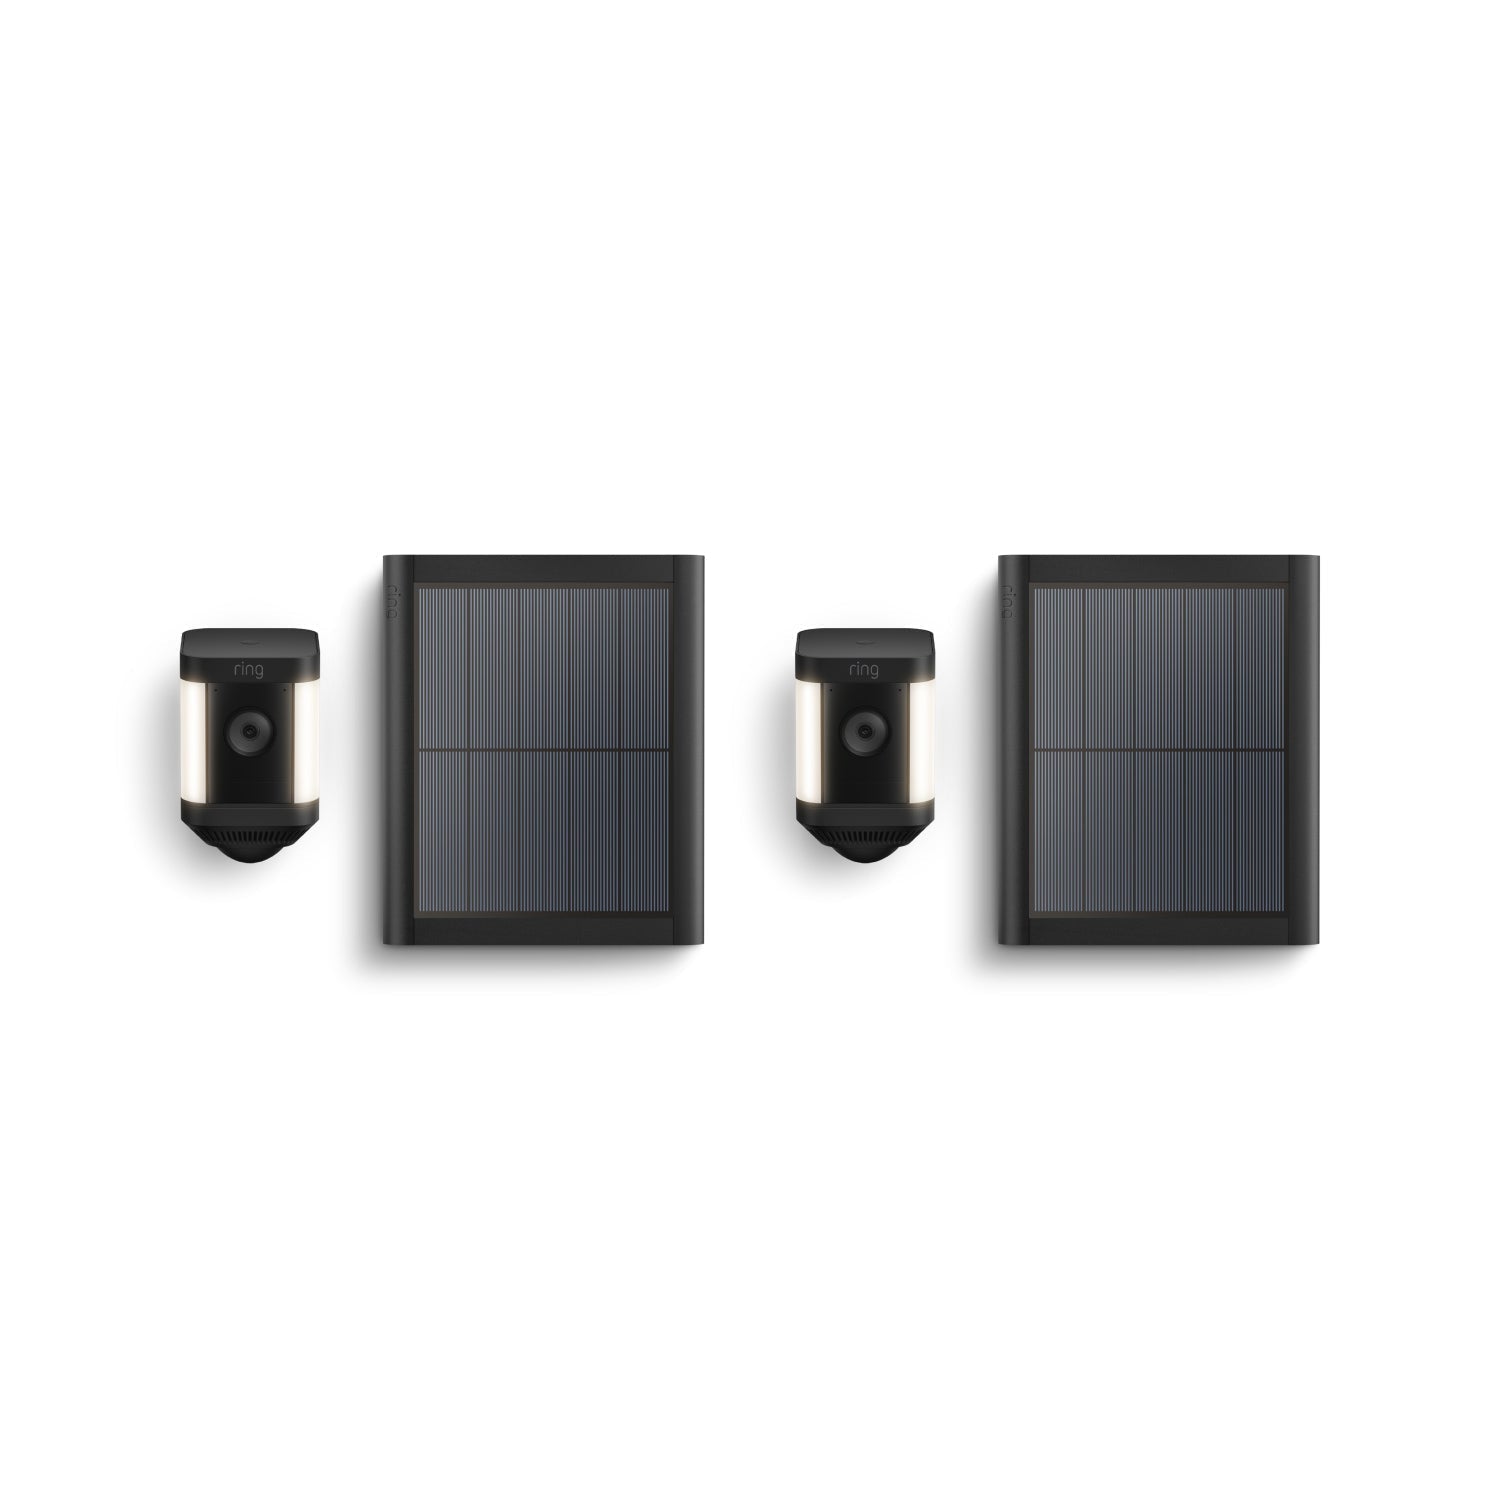 2-Pack Spotlight Cam Plus (Solar) - Black:2-Pack Spotlight Cam Plus (Solar)